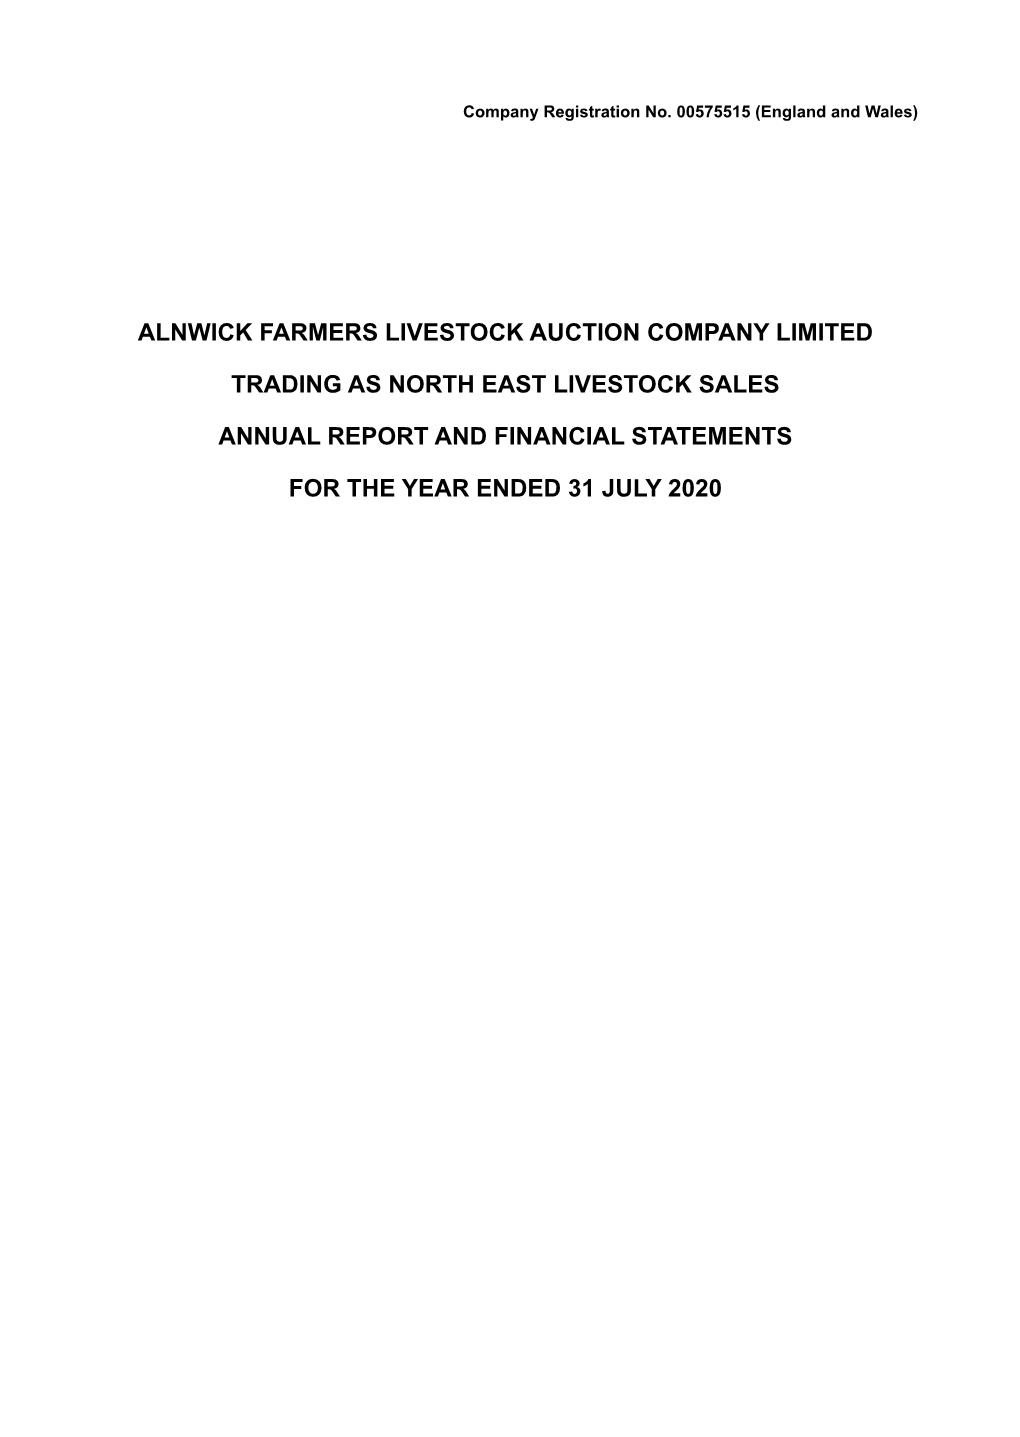 Alnwick Farmers Livestock Auction Company Limited